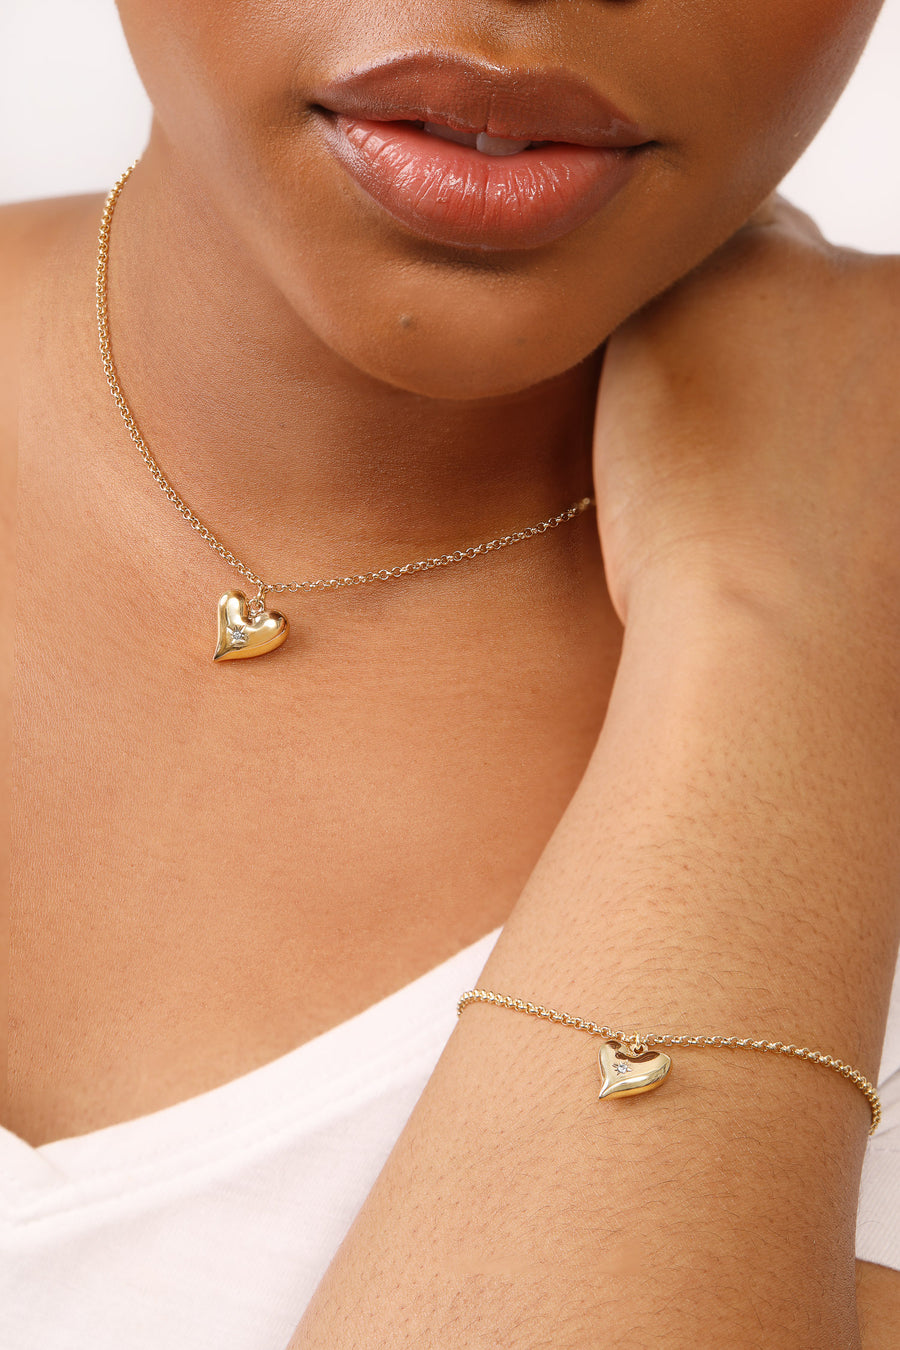 Gold Heart Necklace And Bracelet Set